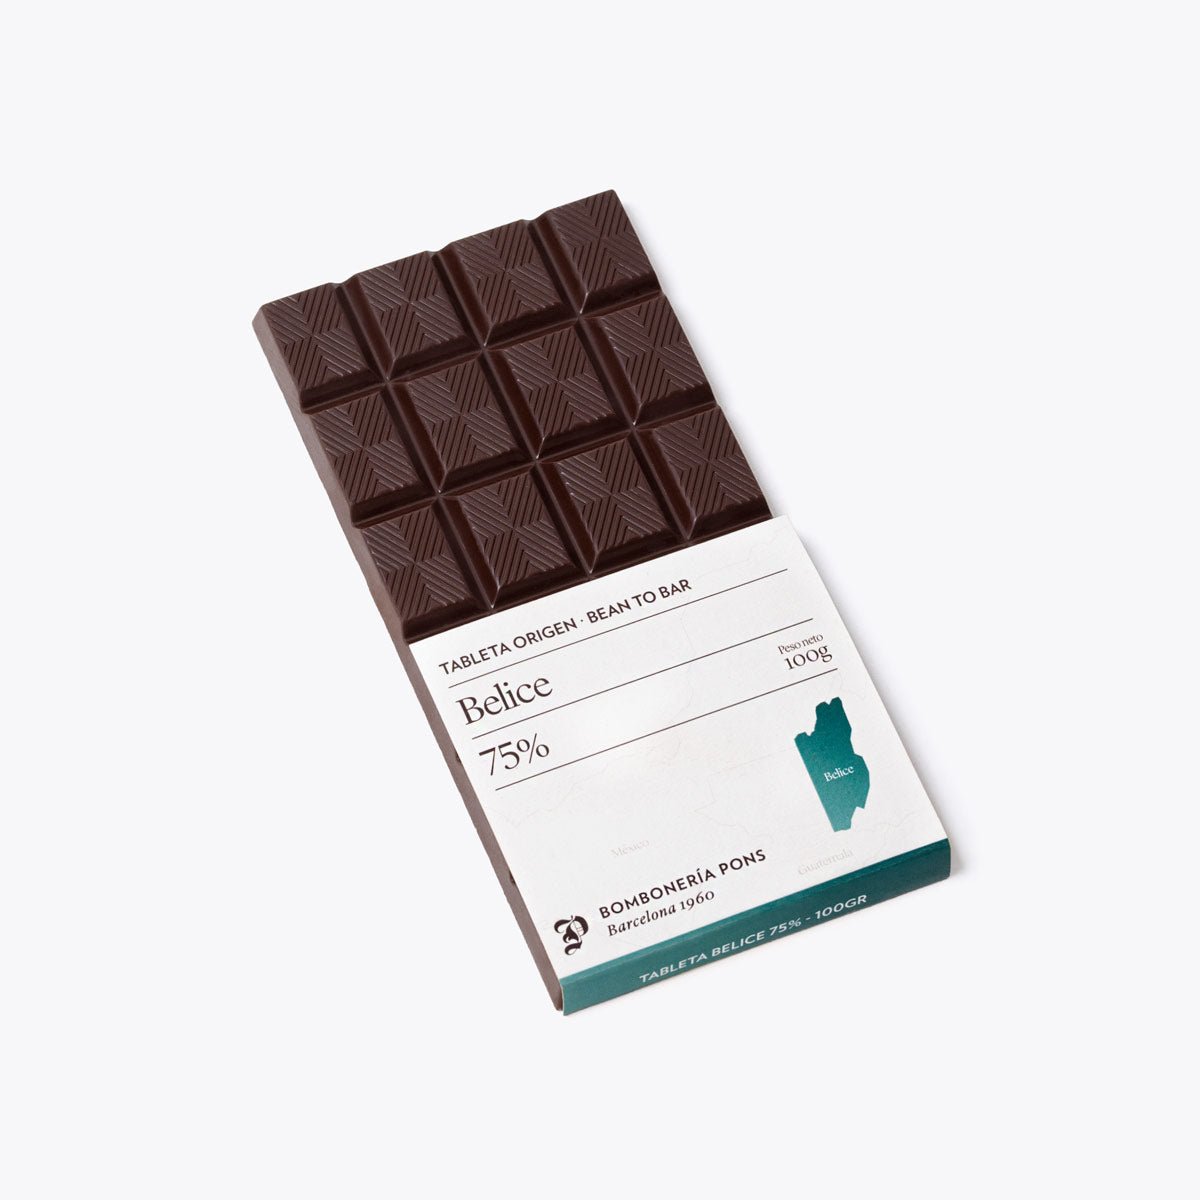 Belice - Tableta de chocolate negro 75% - 100g - Bombonería Pons -